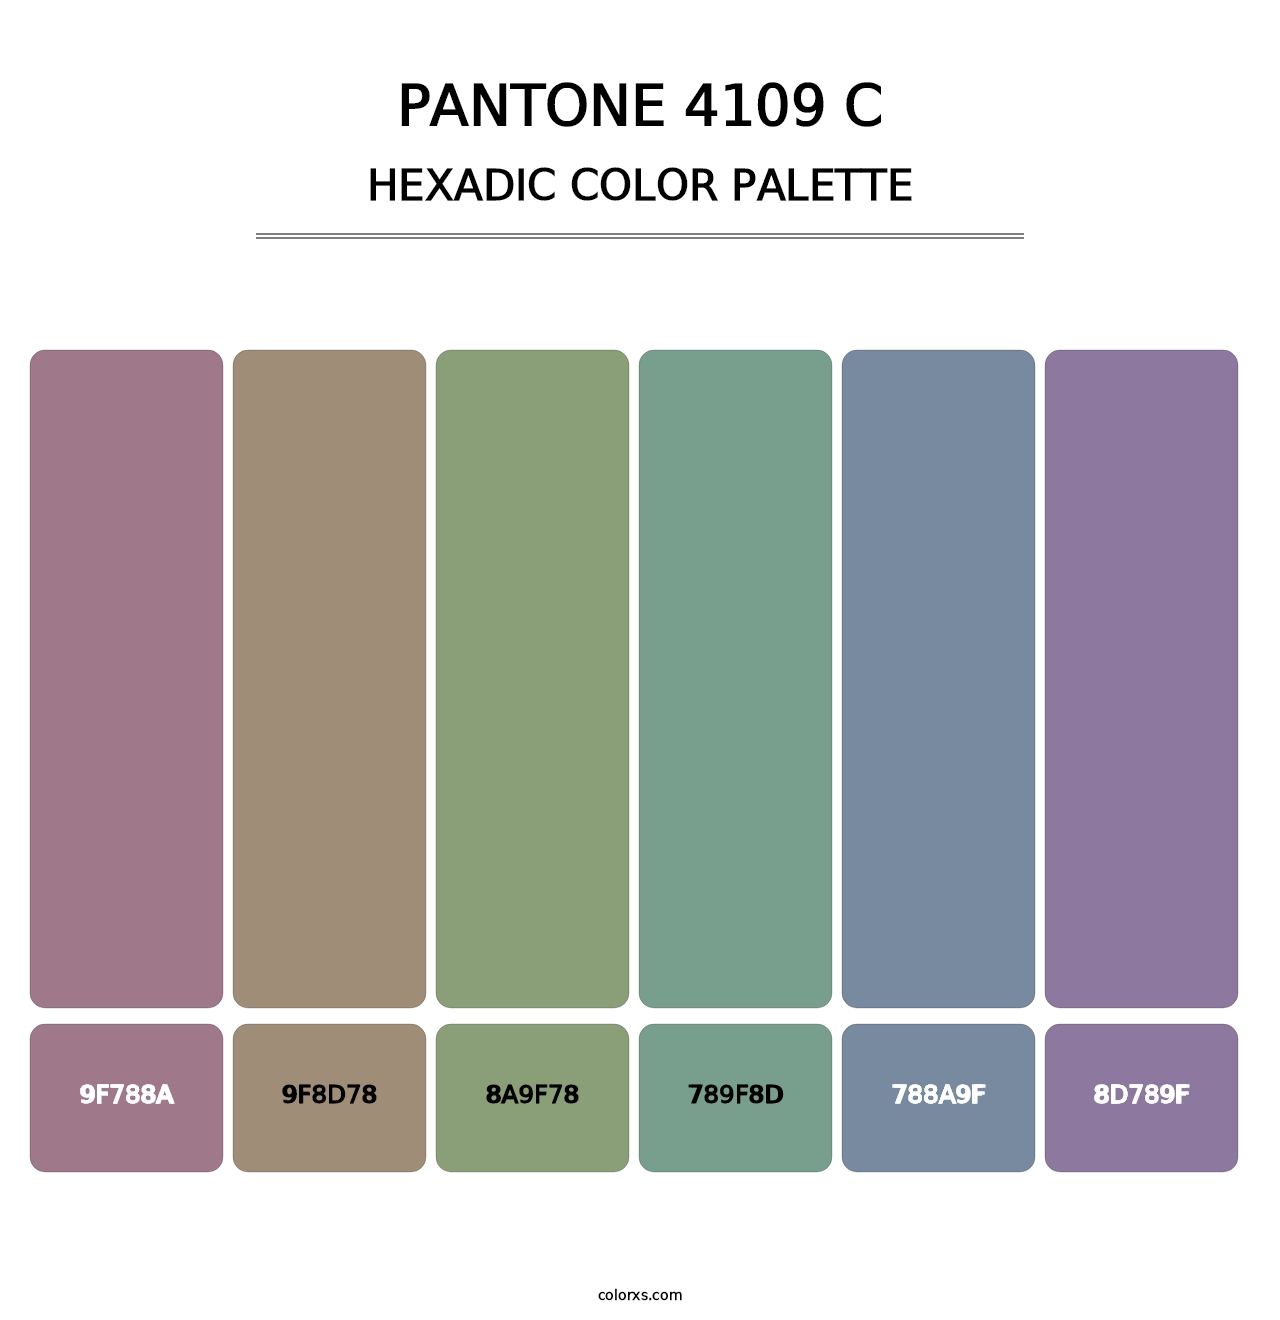 PANTONE 4109 C - Hexadic Color Palette